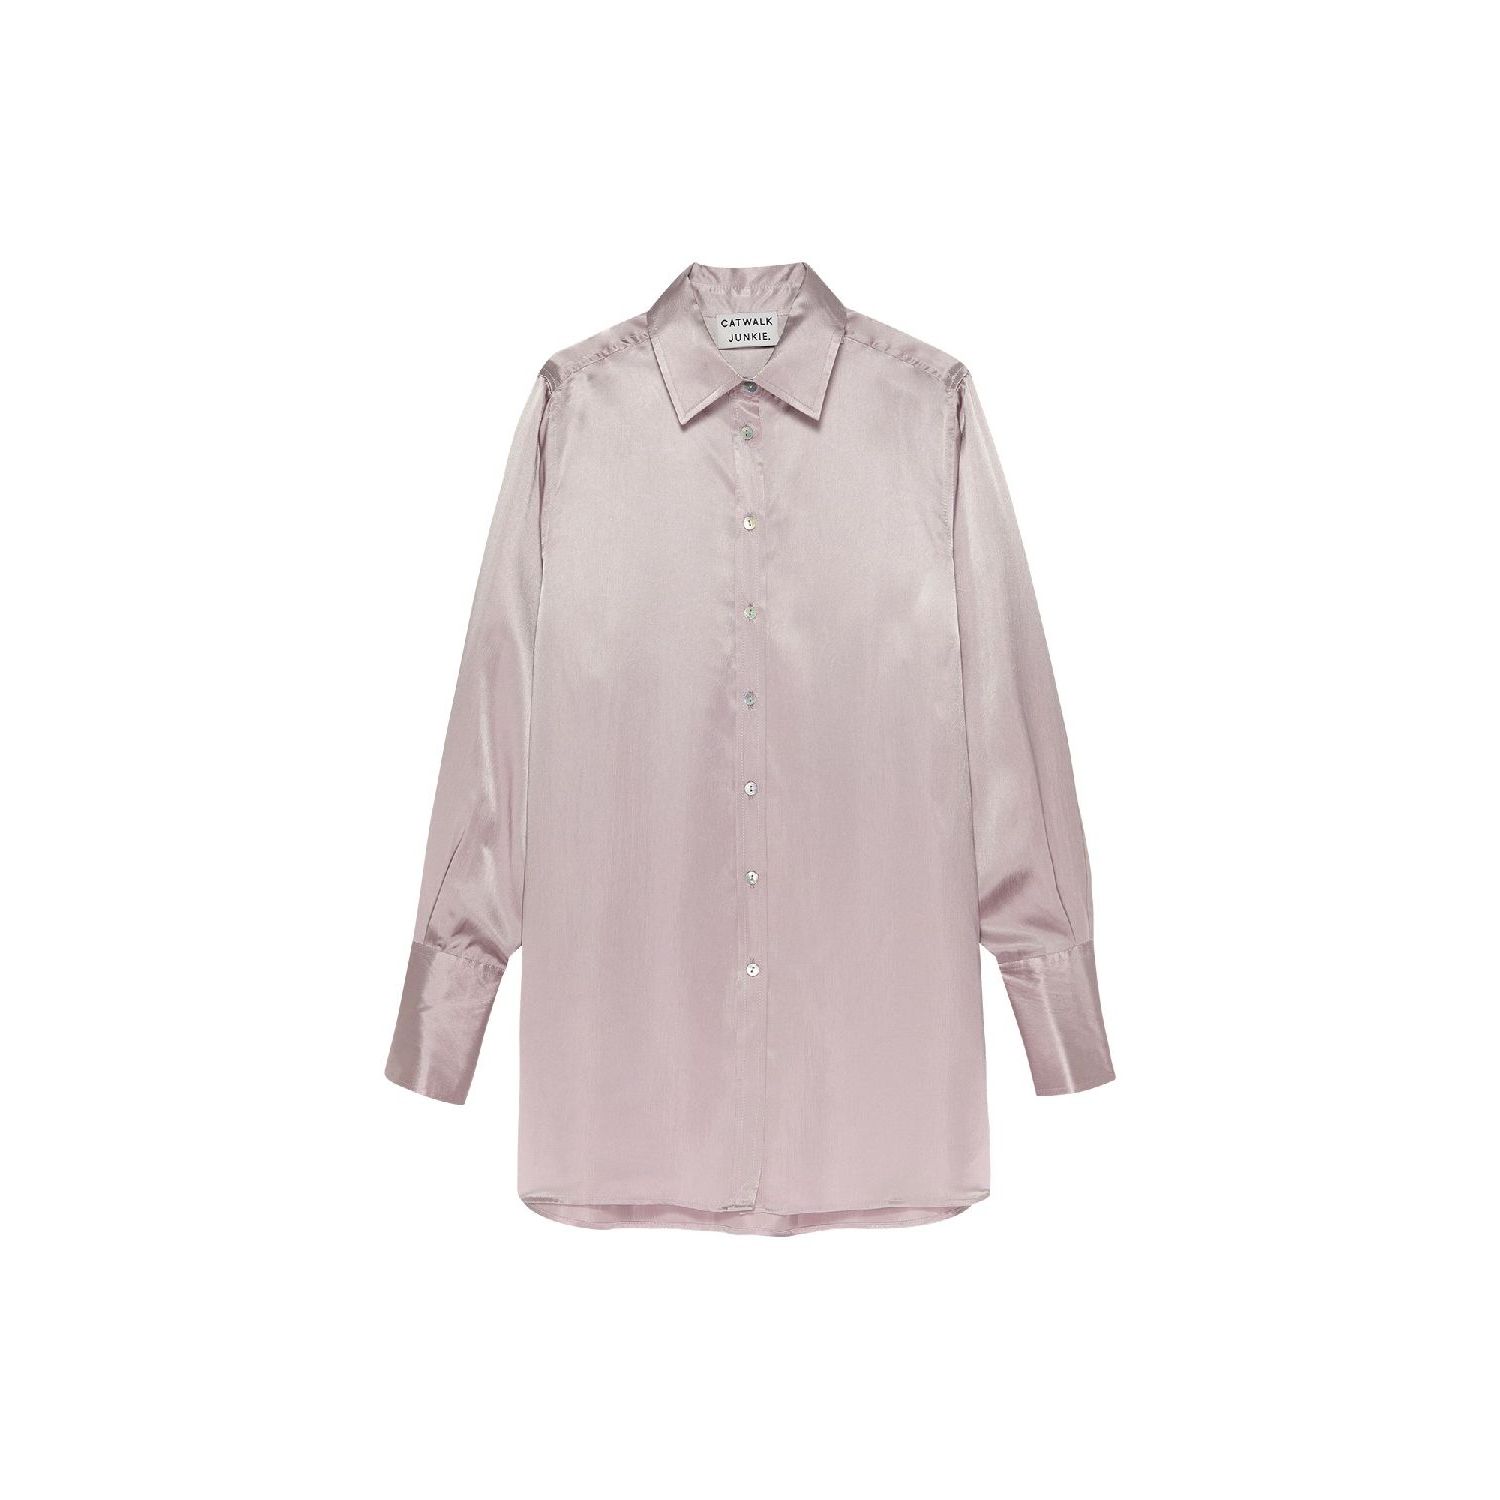 Catwalk Junkie blouse rosanna cloud grey